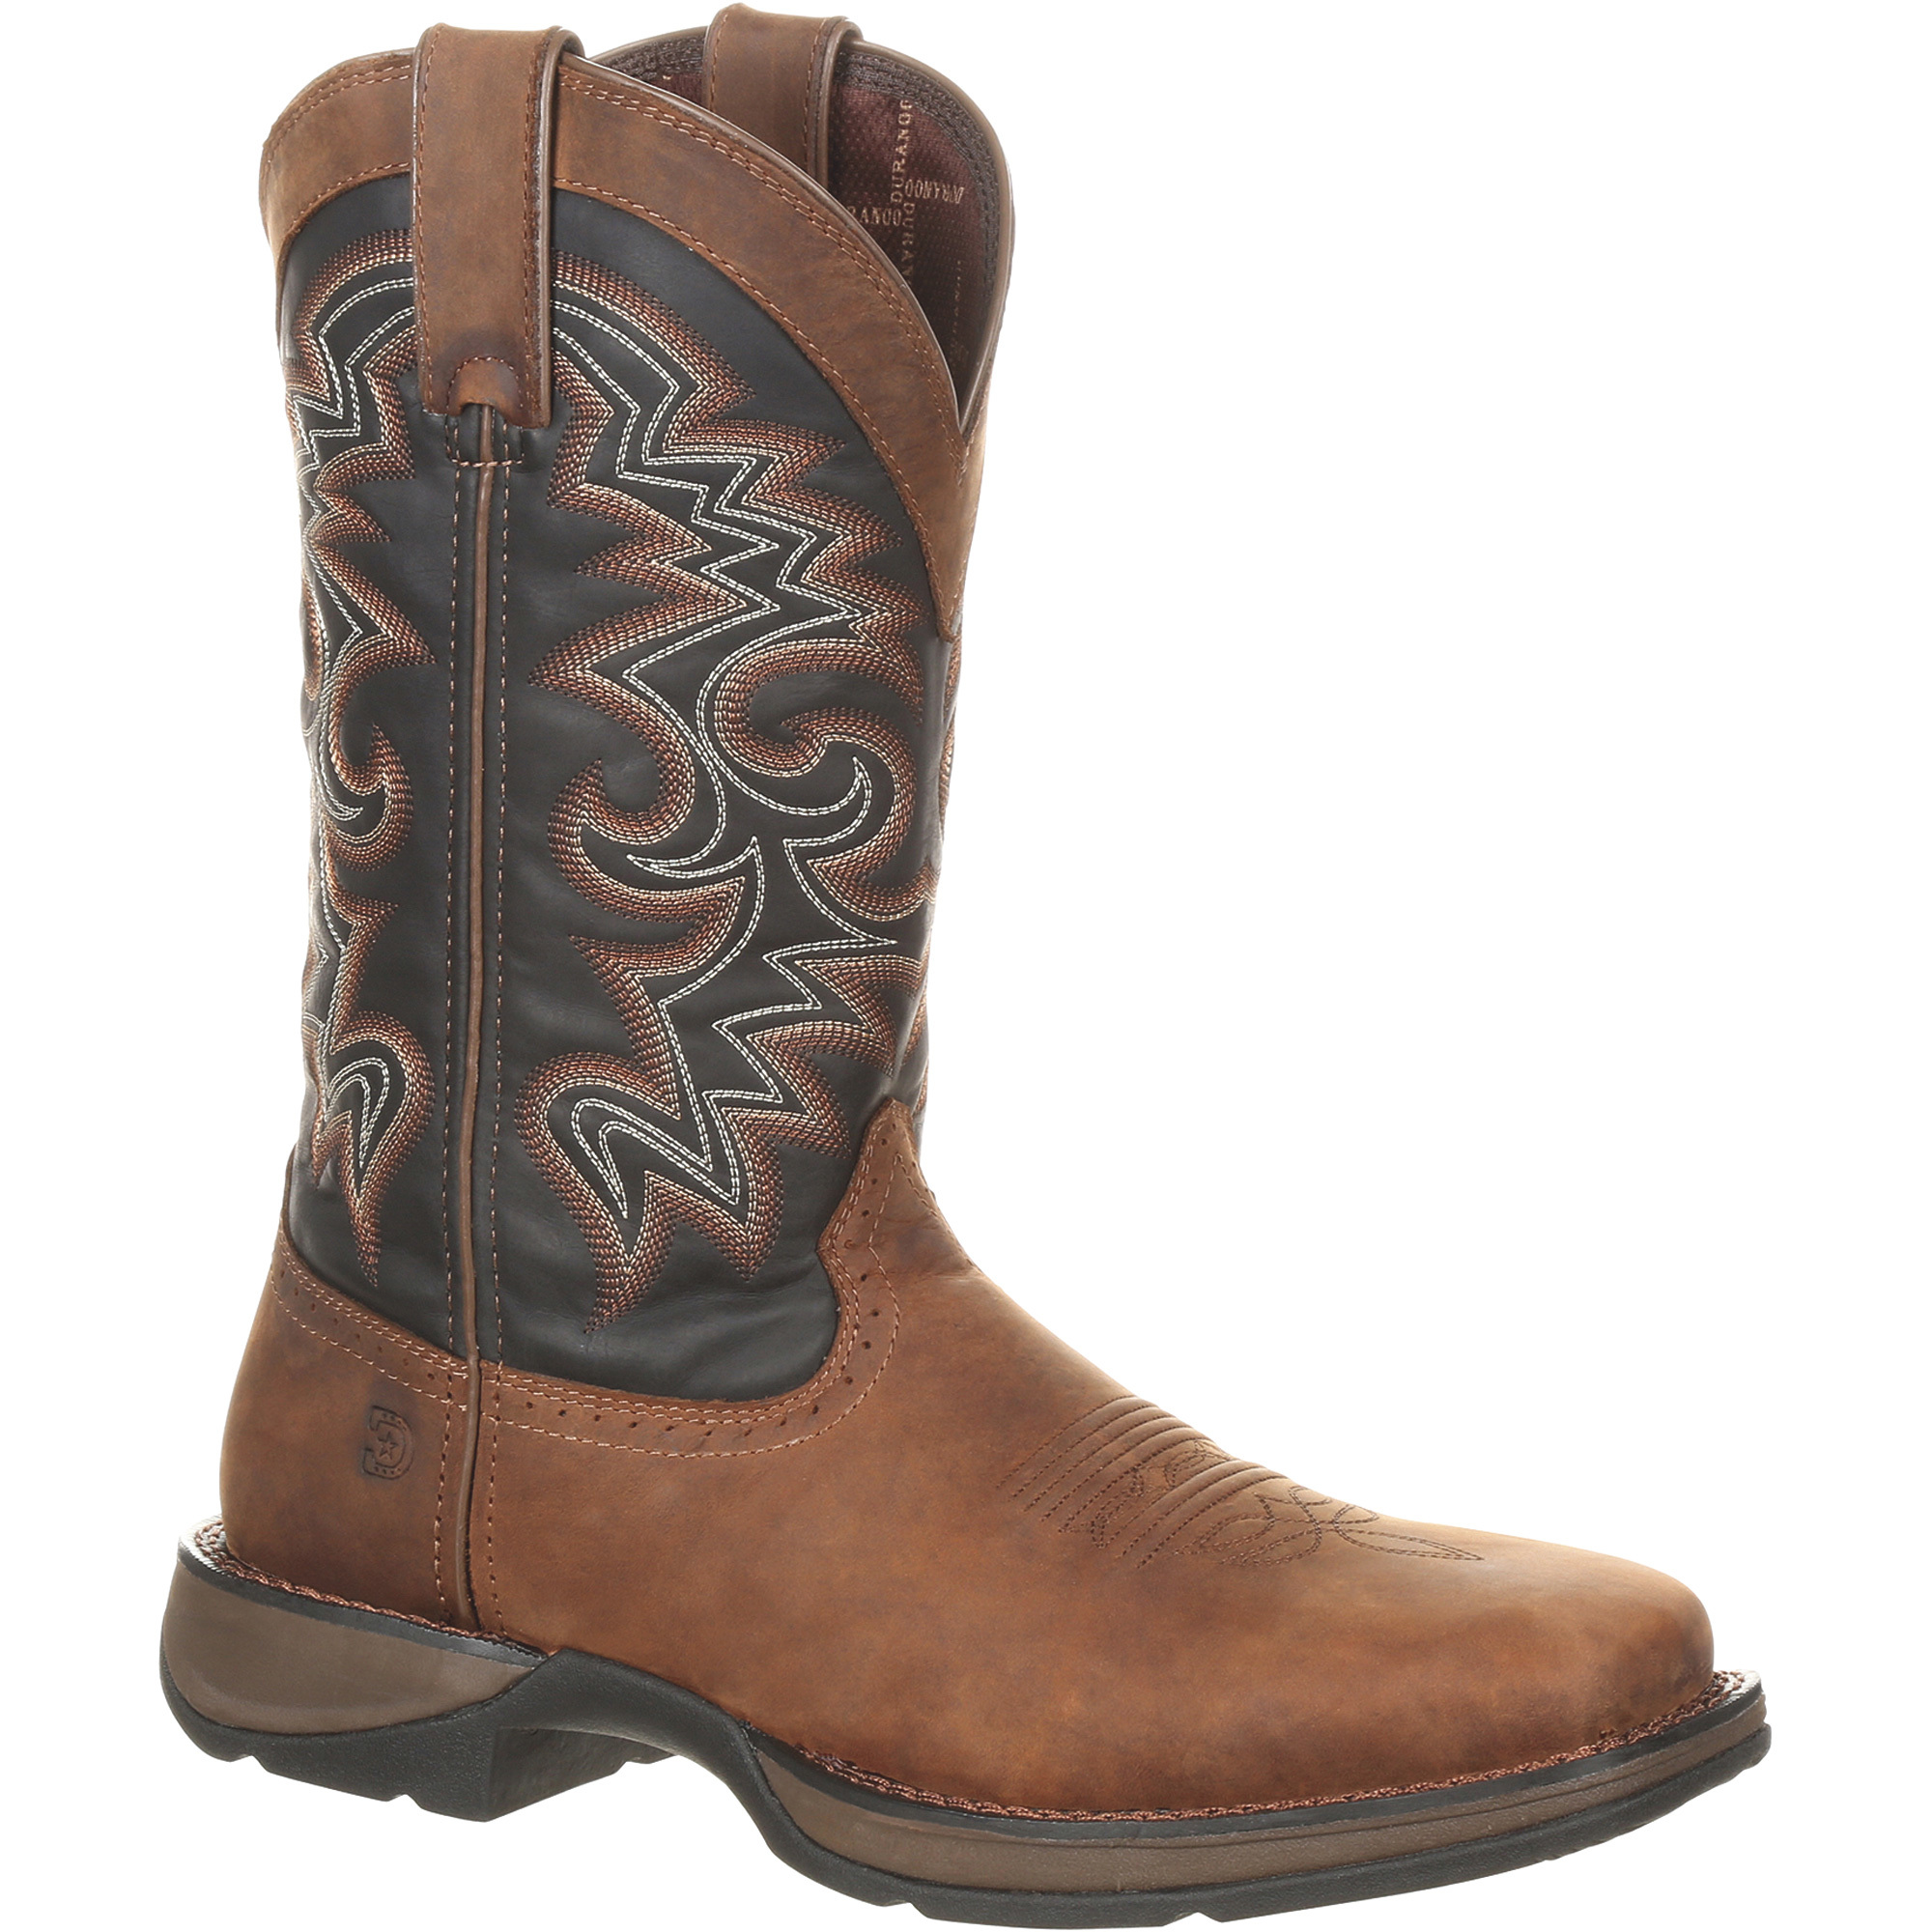 Durango Men's Rebel 12Inch Western Work Boots â Chocolate/Midnight, Size 11 Wide, Model DDB0135